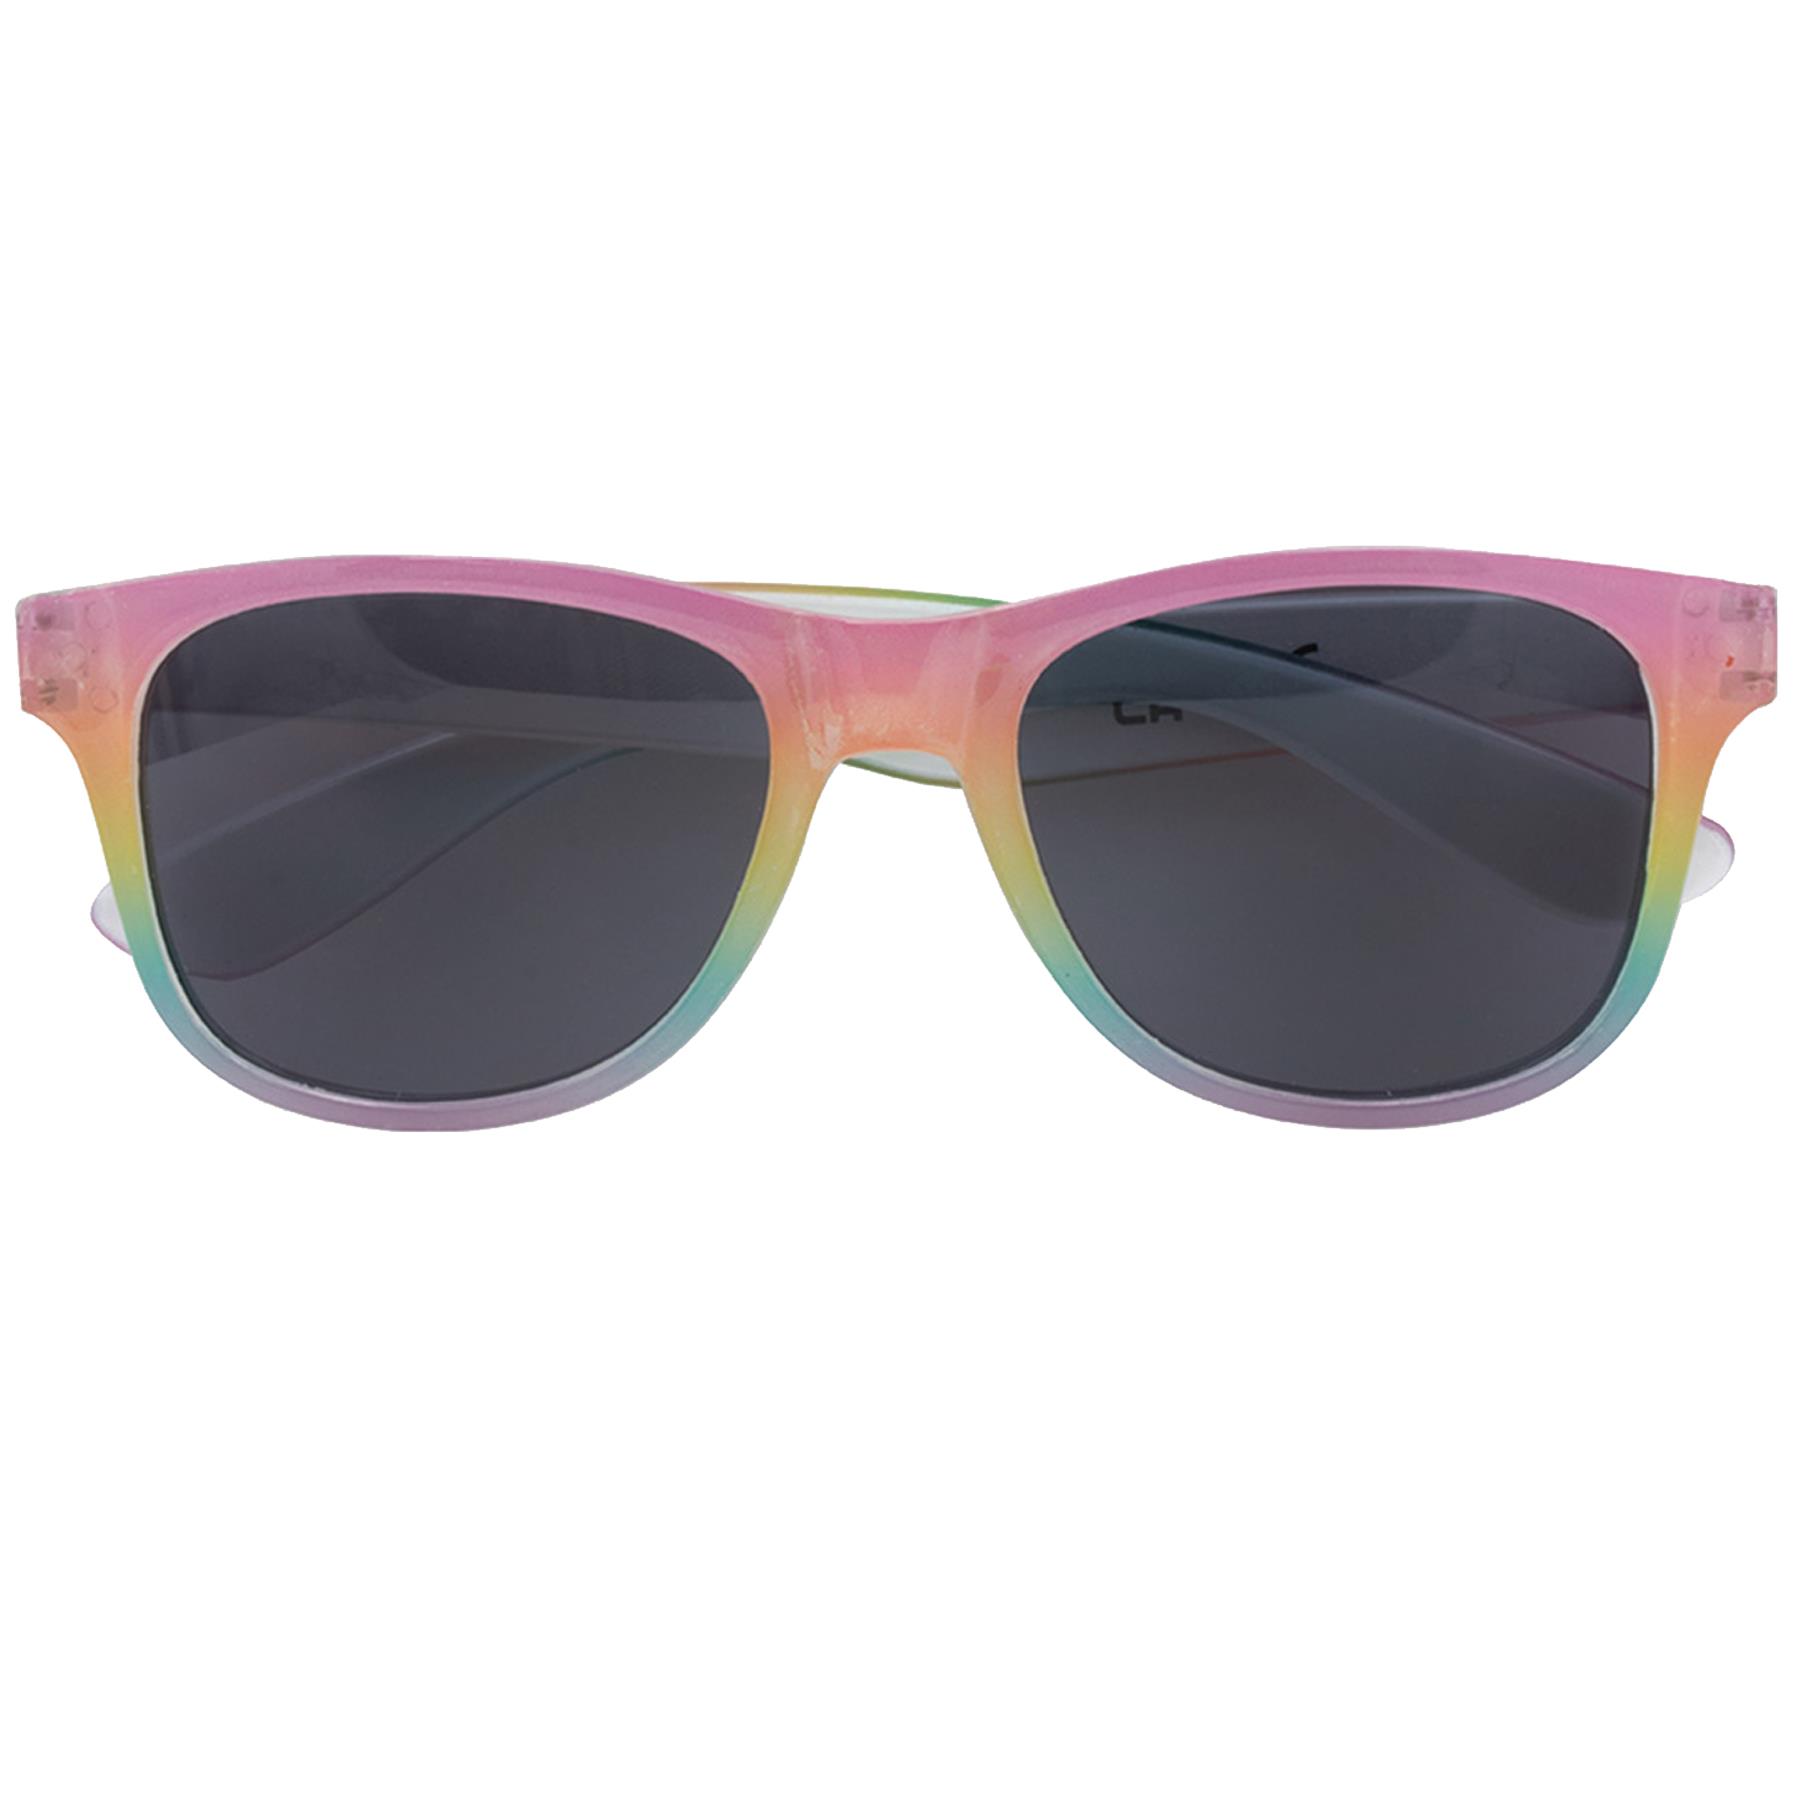 Children's Sunglasses 100% UV protection for Summer Holiday - Plain Rainbow PRK167